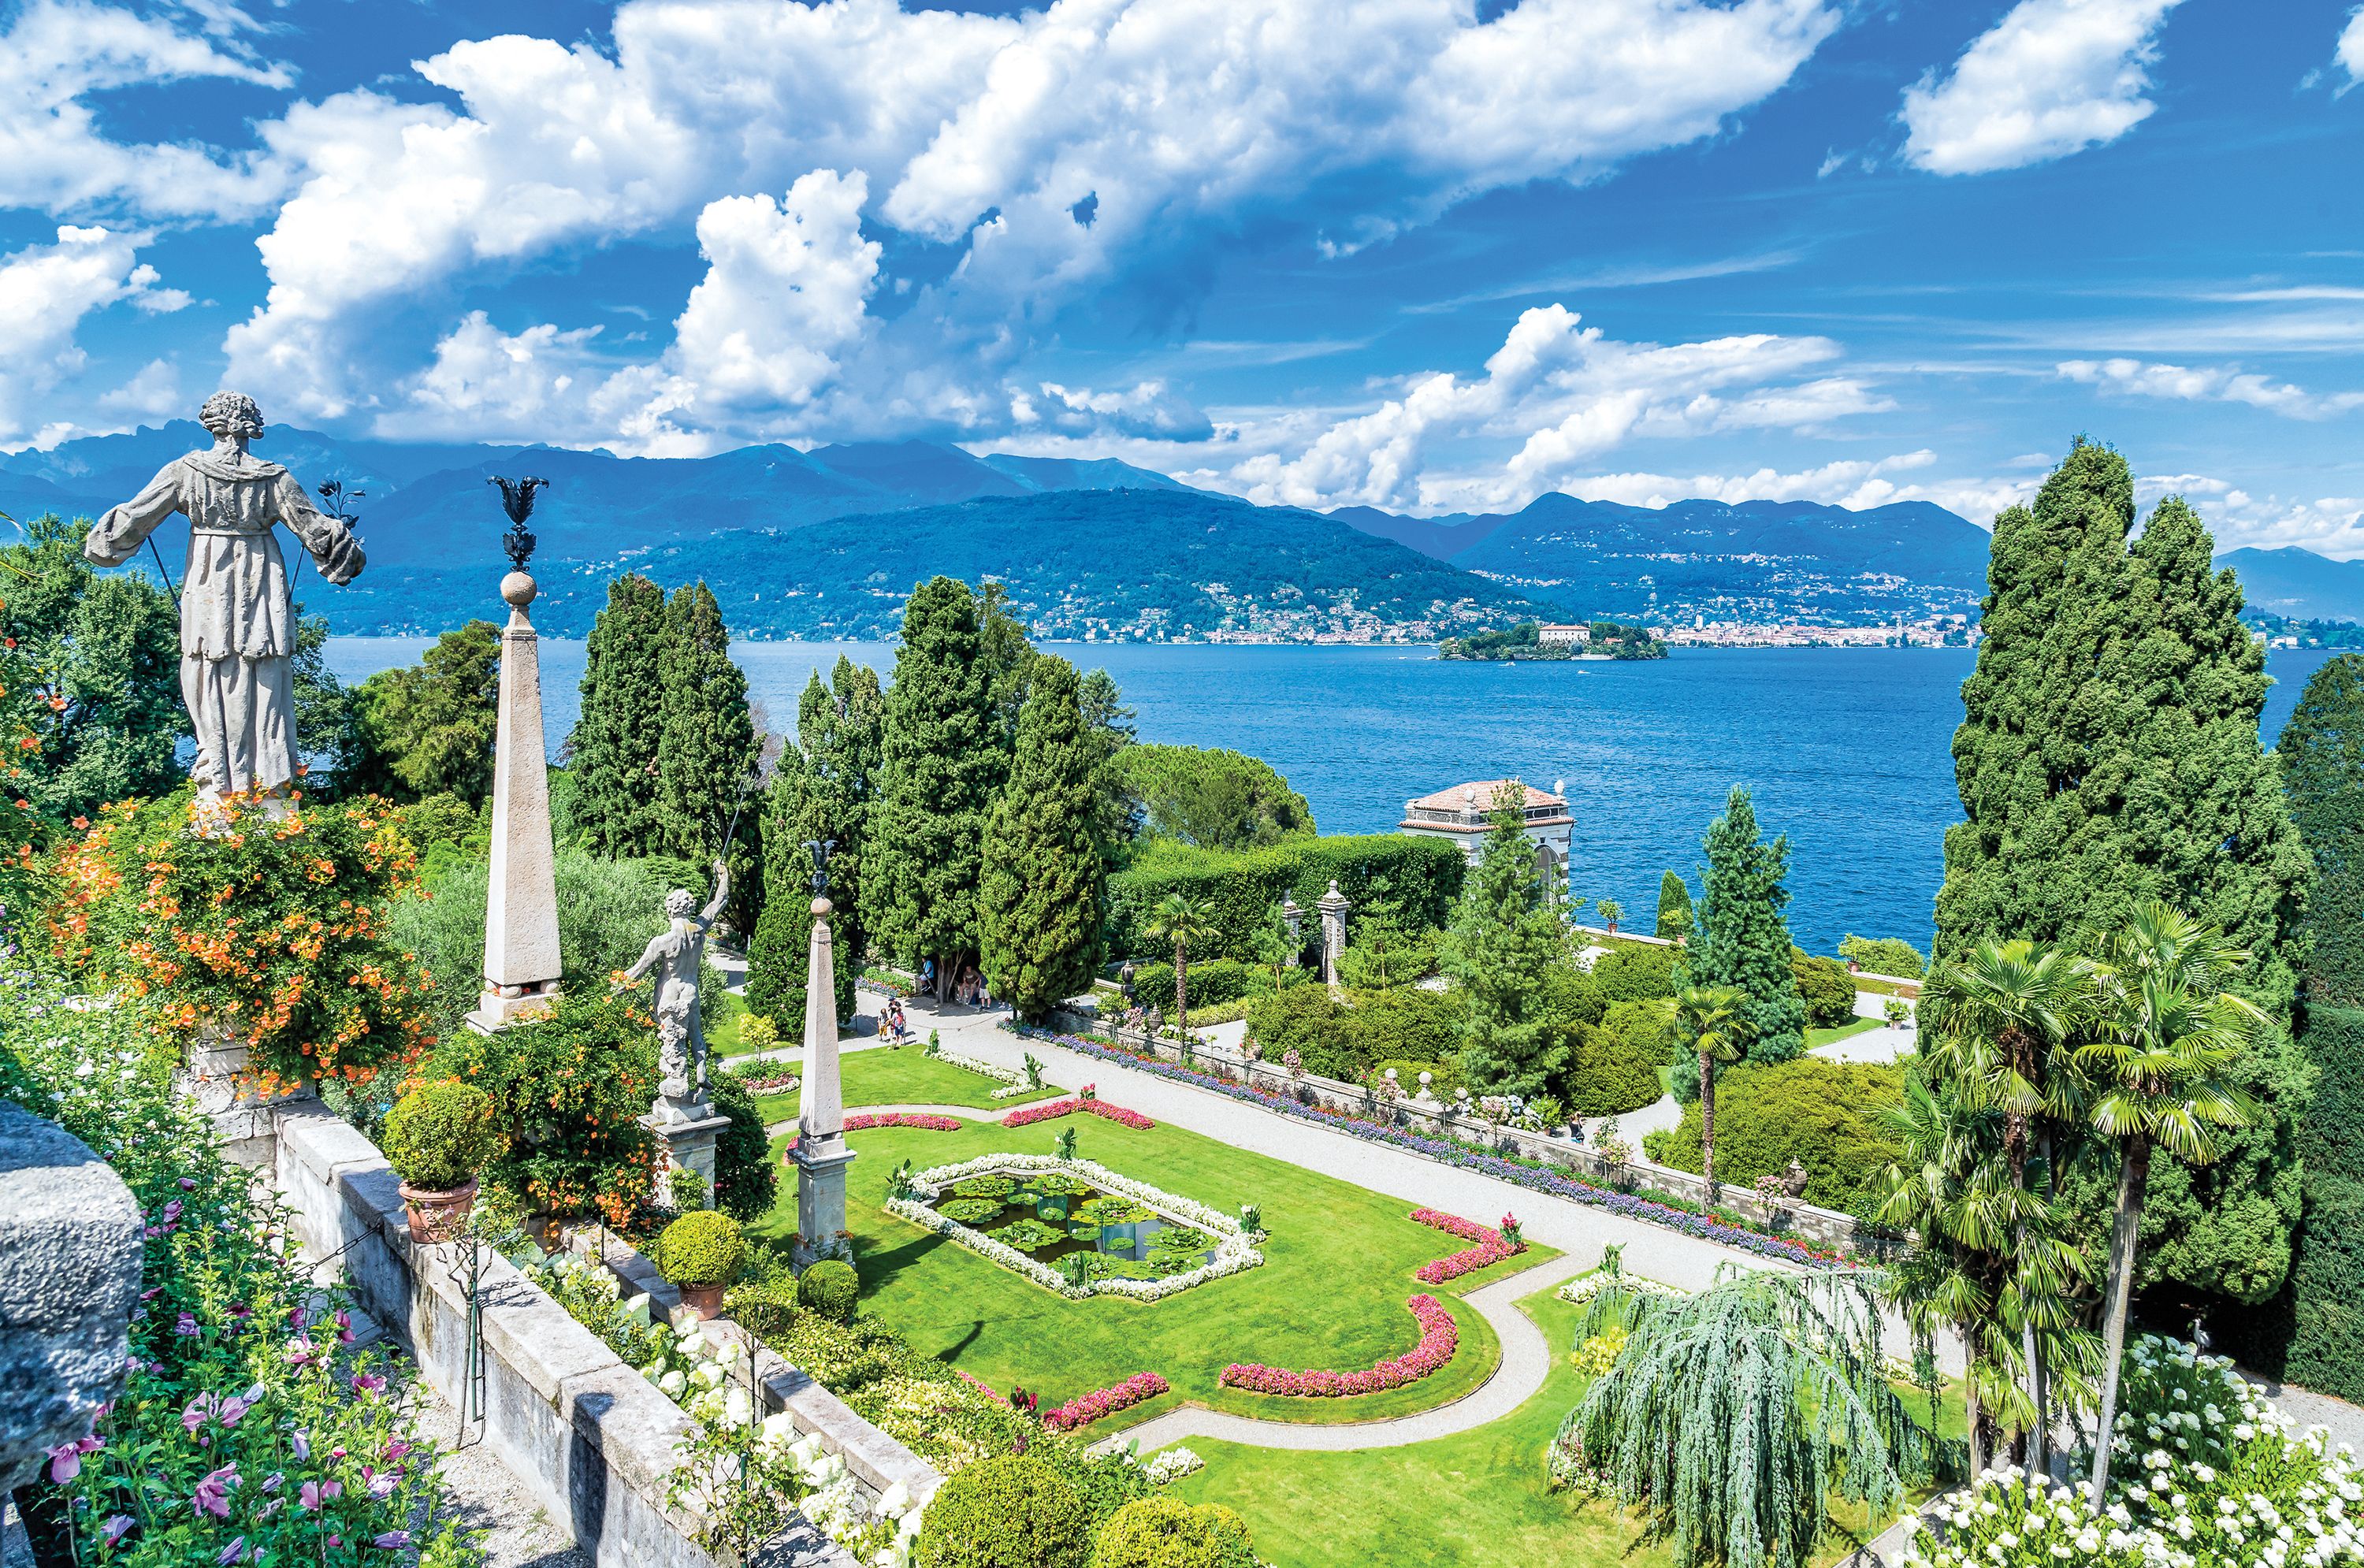 Villas and Gardens of the Italian Lakes with Carol Klein